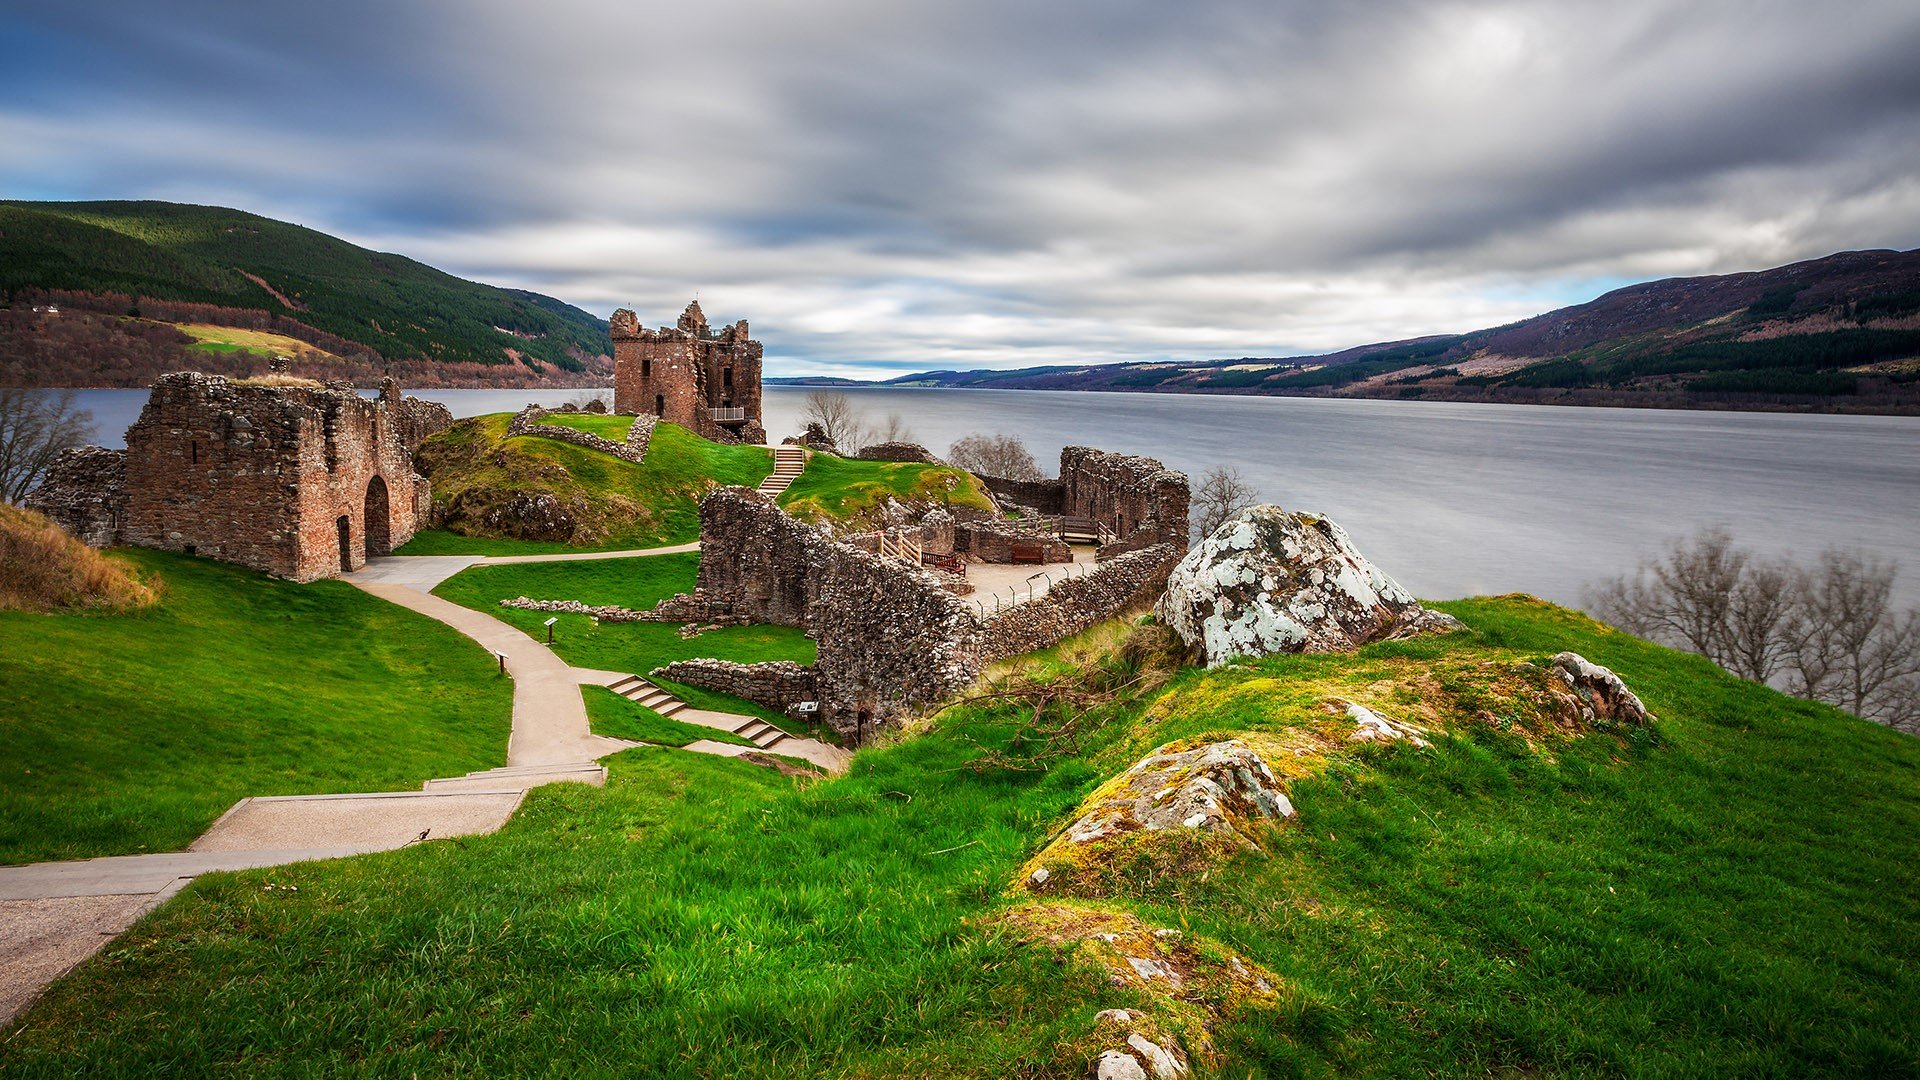 Scotland is beautiful. Замок Уркухарт Шотландия. Замок Аркарт в Шотландии. Замок Данноттар, Шотландия, Великобритания. Кирримьюр Шотландия.